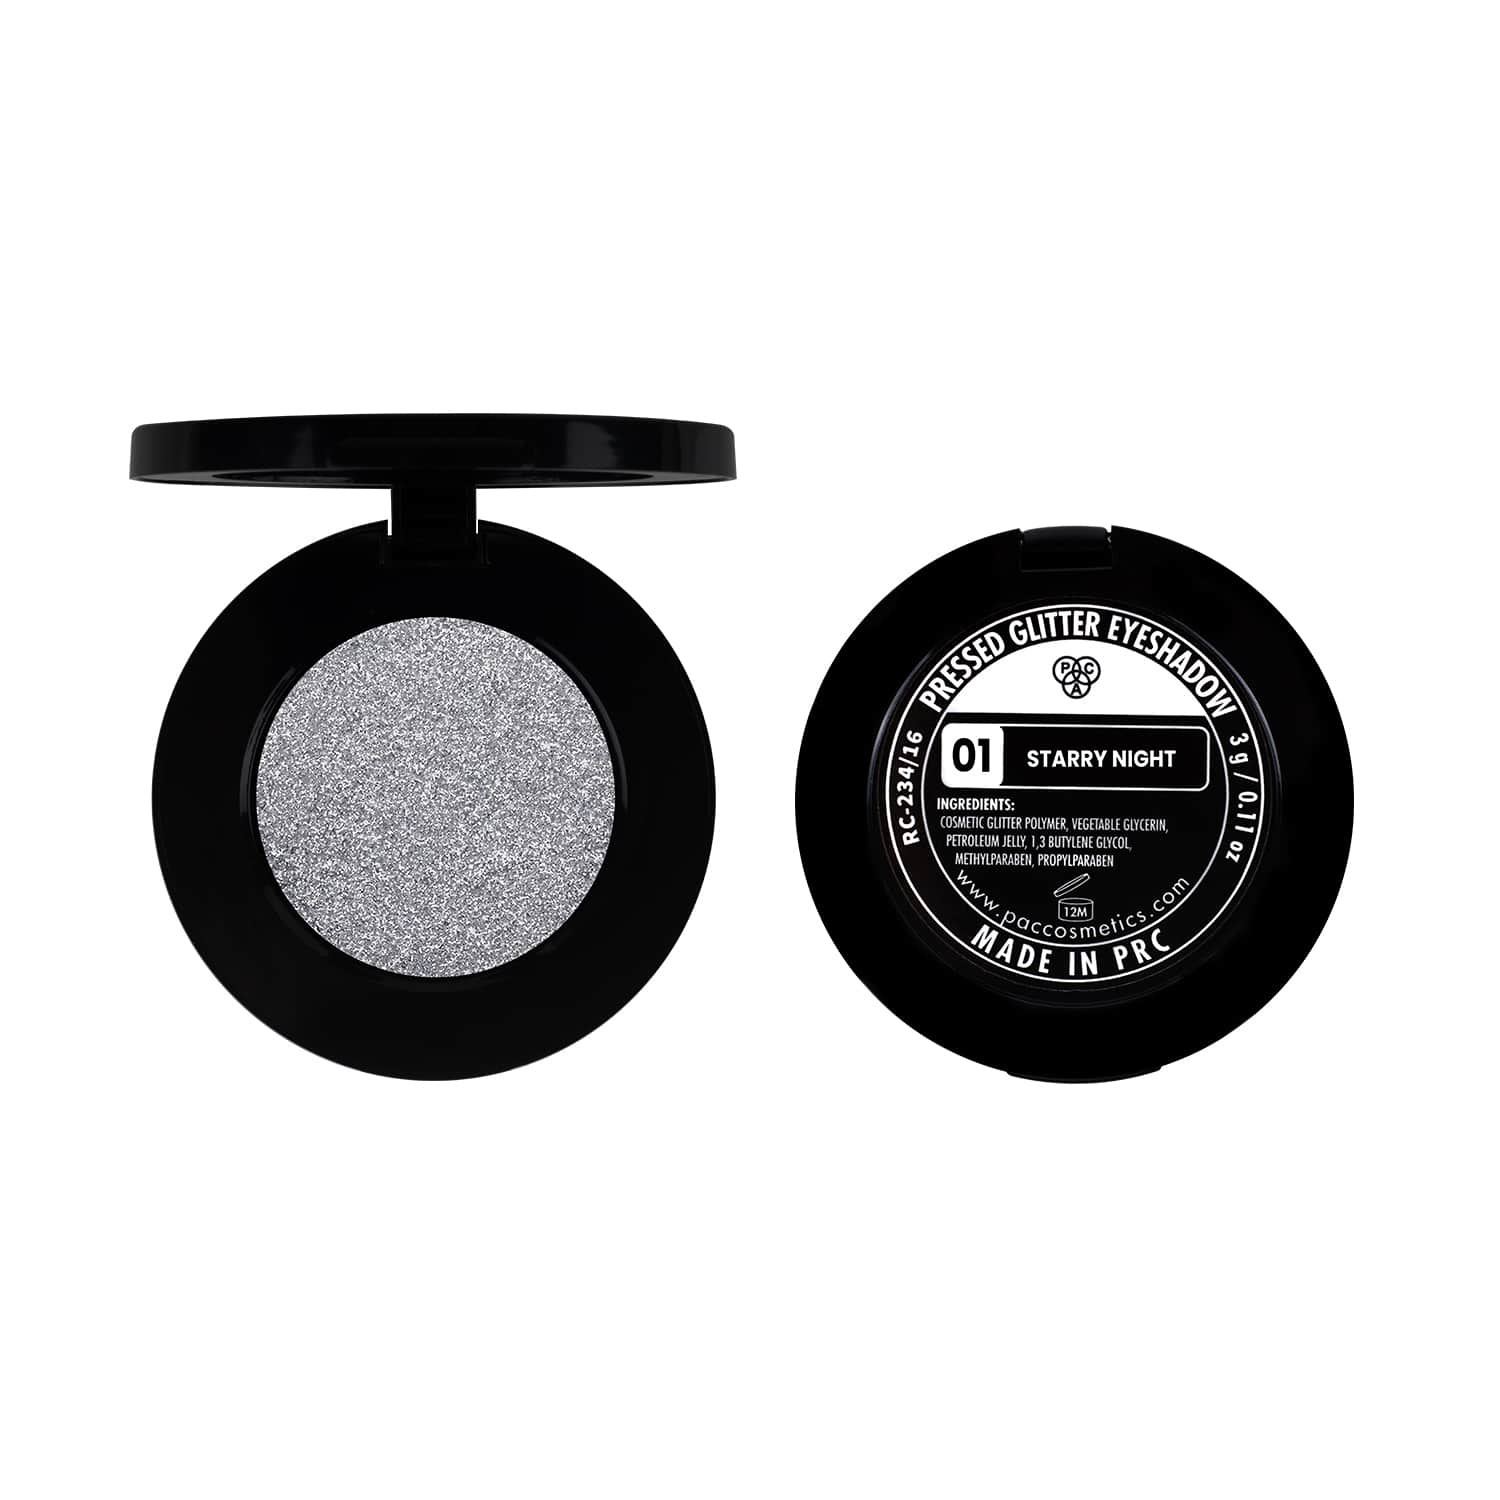 PAC Pressed Glitter Eyeshadow - 01 (Starry Night) PAC